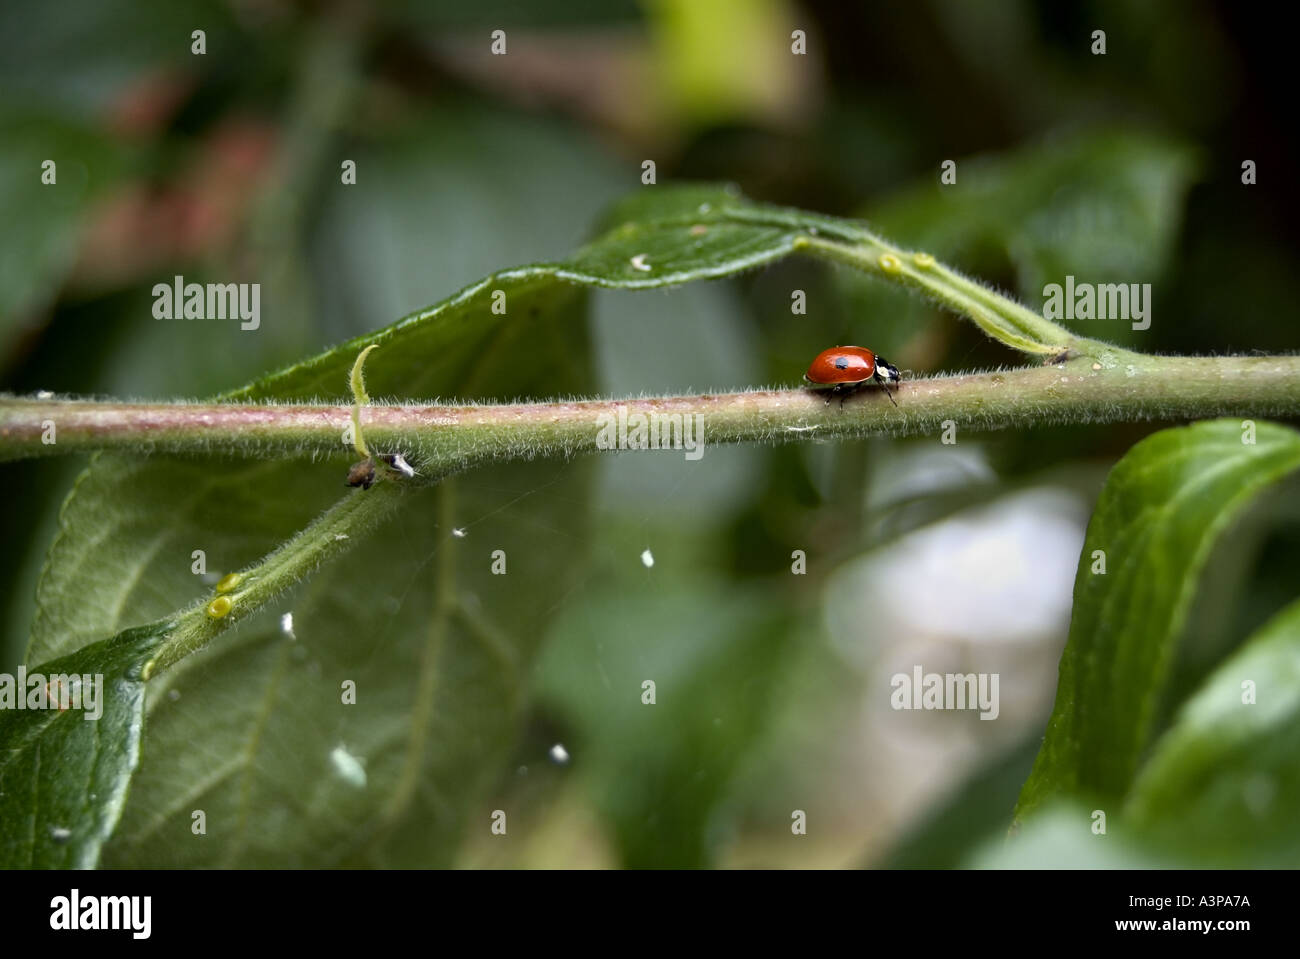 Ladybird hunting Greenfly infesting a Plum tree Stock Photo